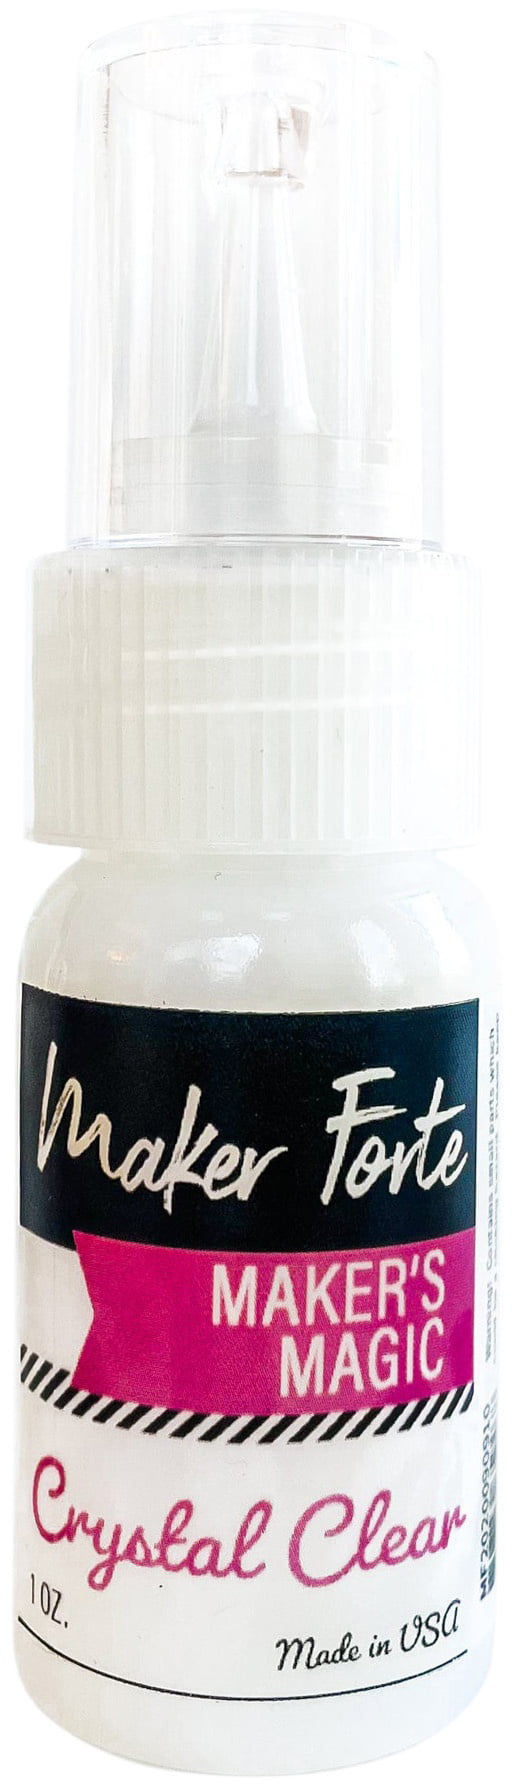 Maker Forte Maker's Magic Glue 1oz-Crystal Clear 